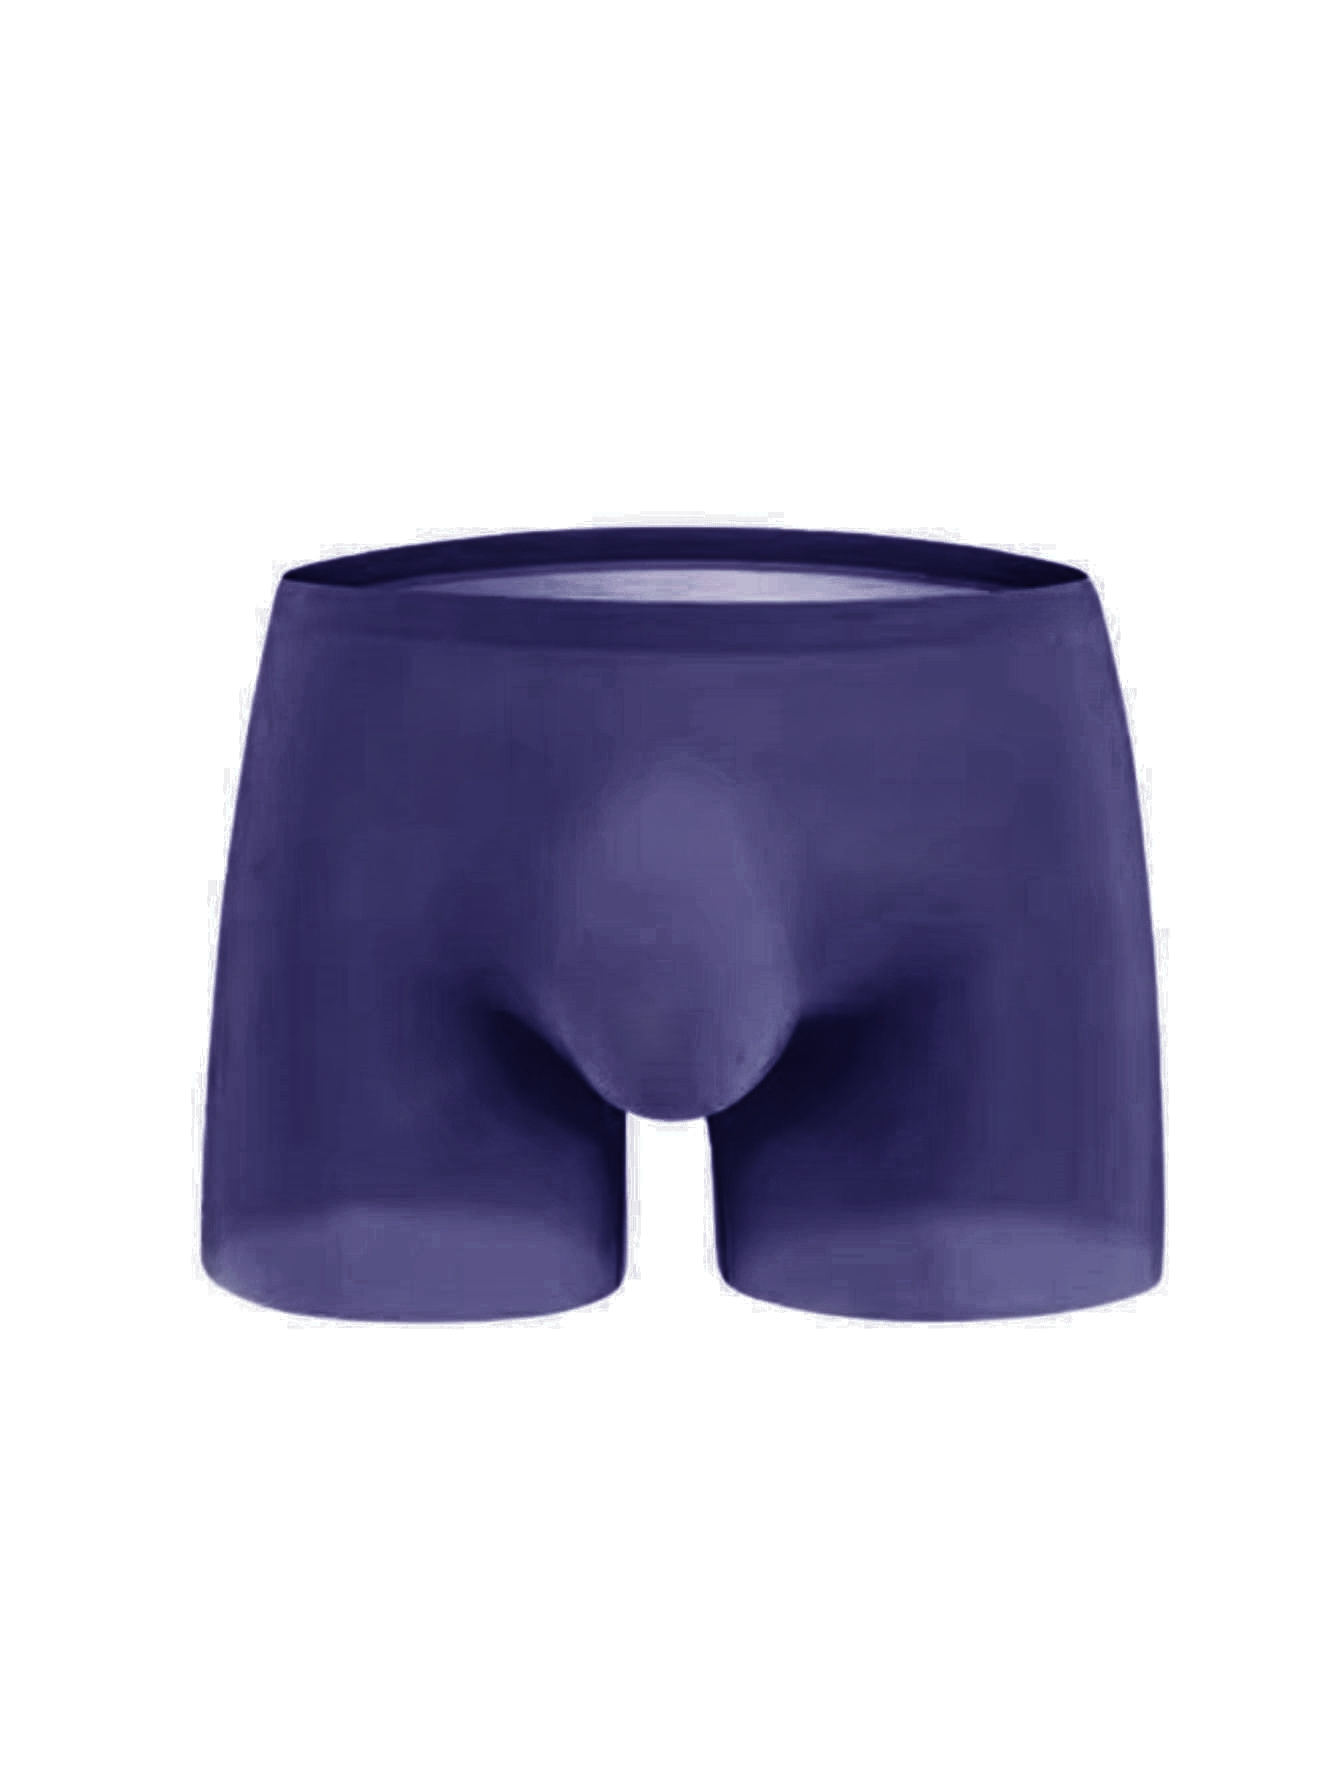 Men Transparent U Pouch Underwear 4Pcs Briefs Comfy Ice Silky Ultra Thin  Panties